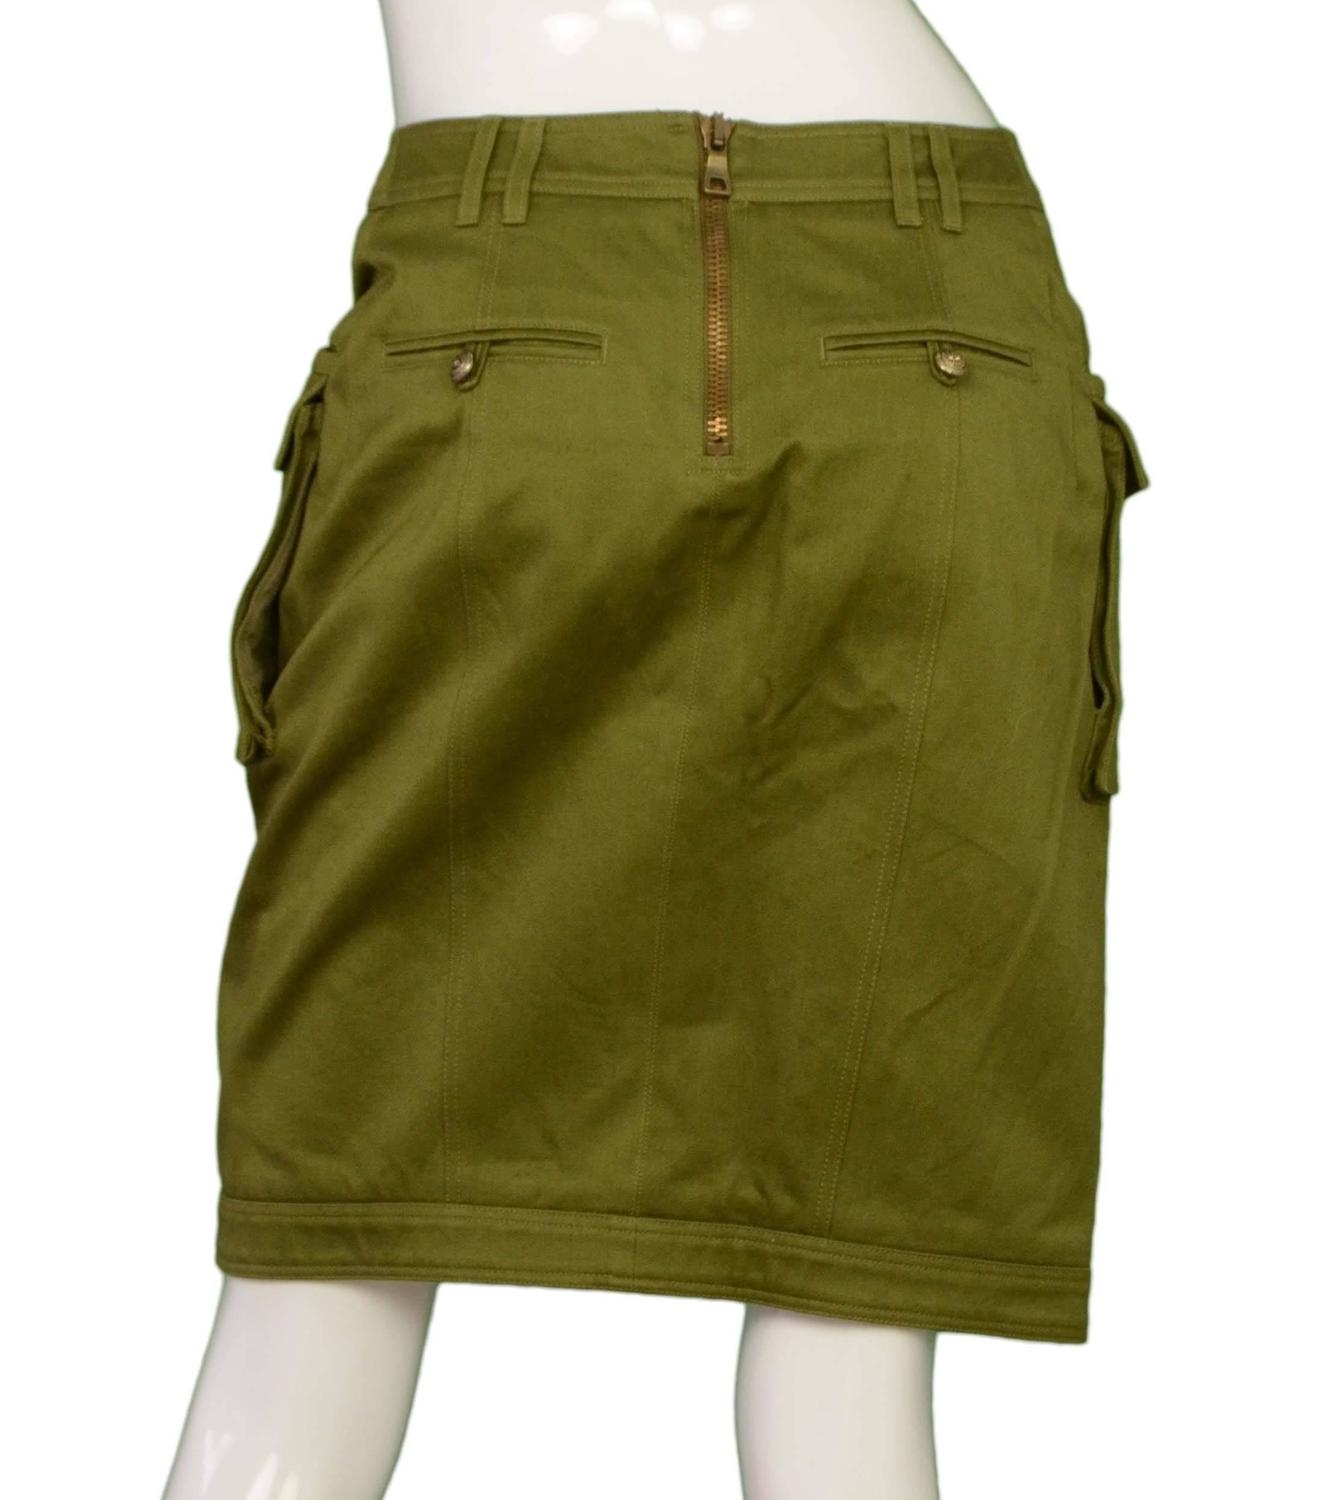 Balmain Olive Green Cotton Cargo Skirt sz 40 For Sale at 1stdibs